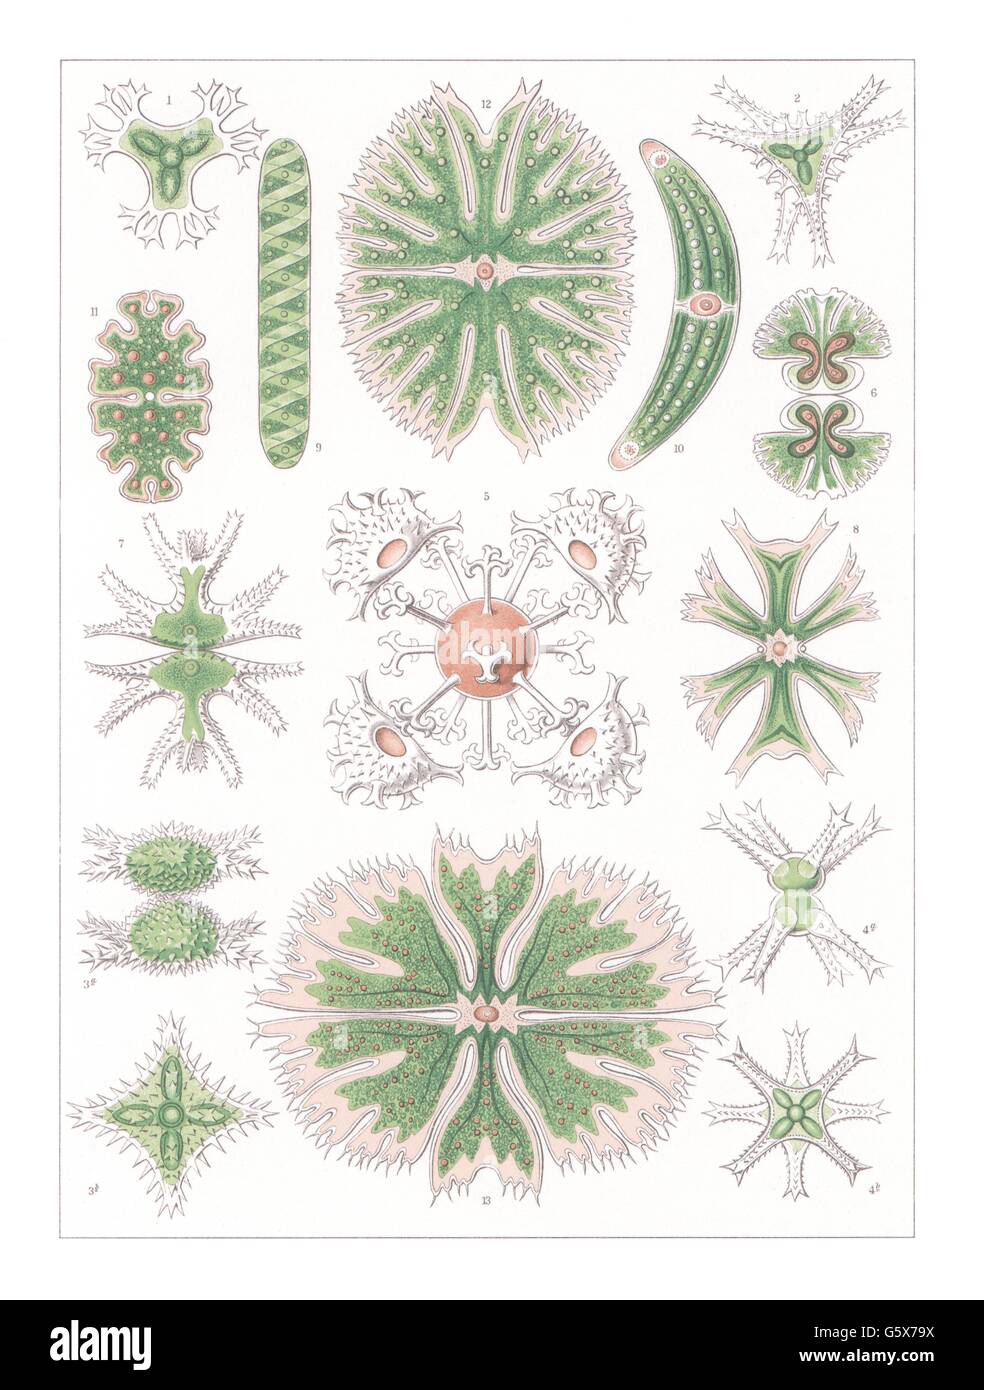 botanik, desmidiales (Desmidiaceae), Farblithographie, aus: Ernst Haeckel, 'Kunstformen der Natur', Leipzig - Wien, 1899 - 1904, Additional-Rights-Clearences-not available Stockfoto